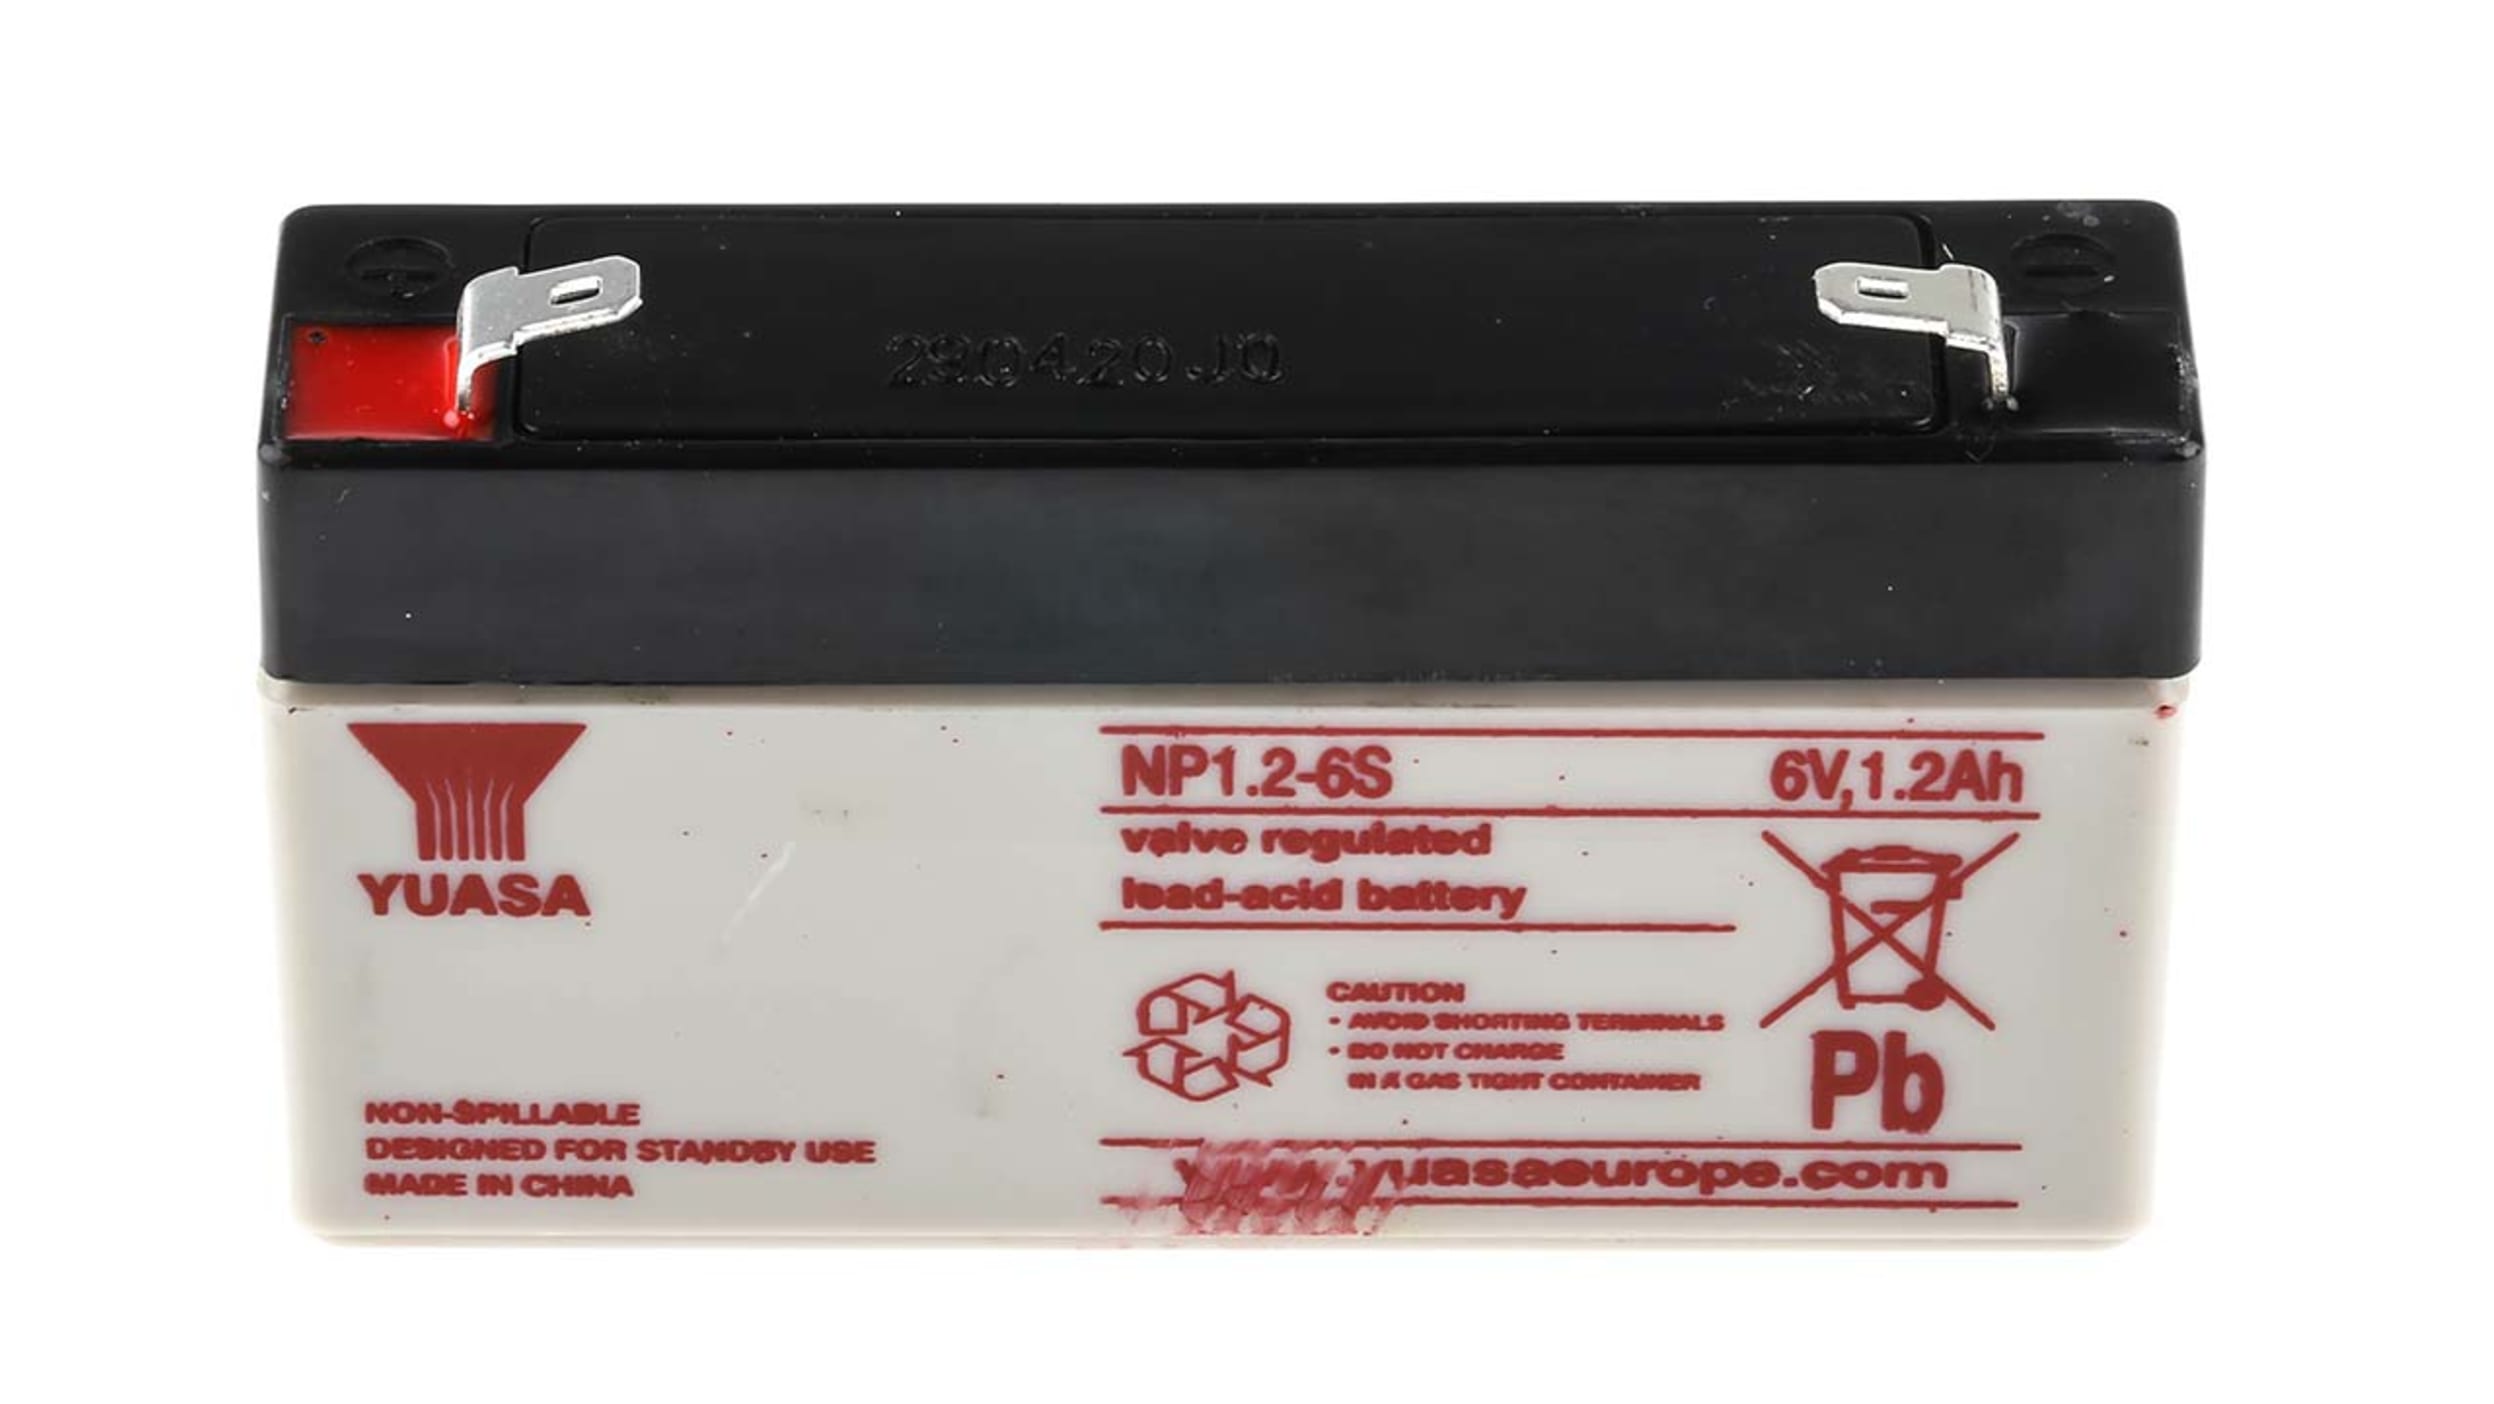 Batterie plomb étanche NP4-6 Yuasa 6V 4ah